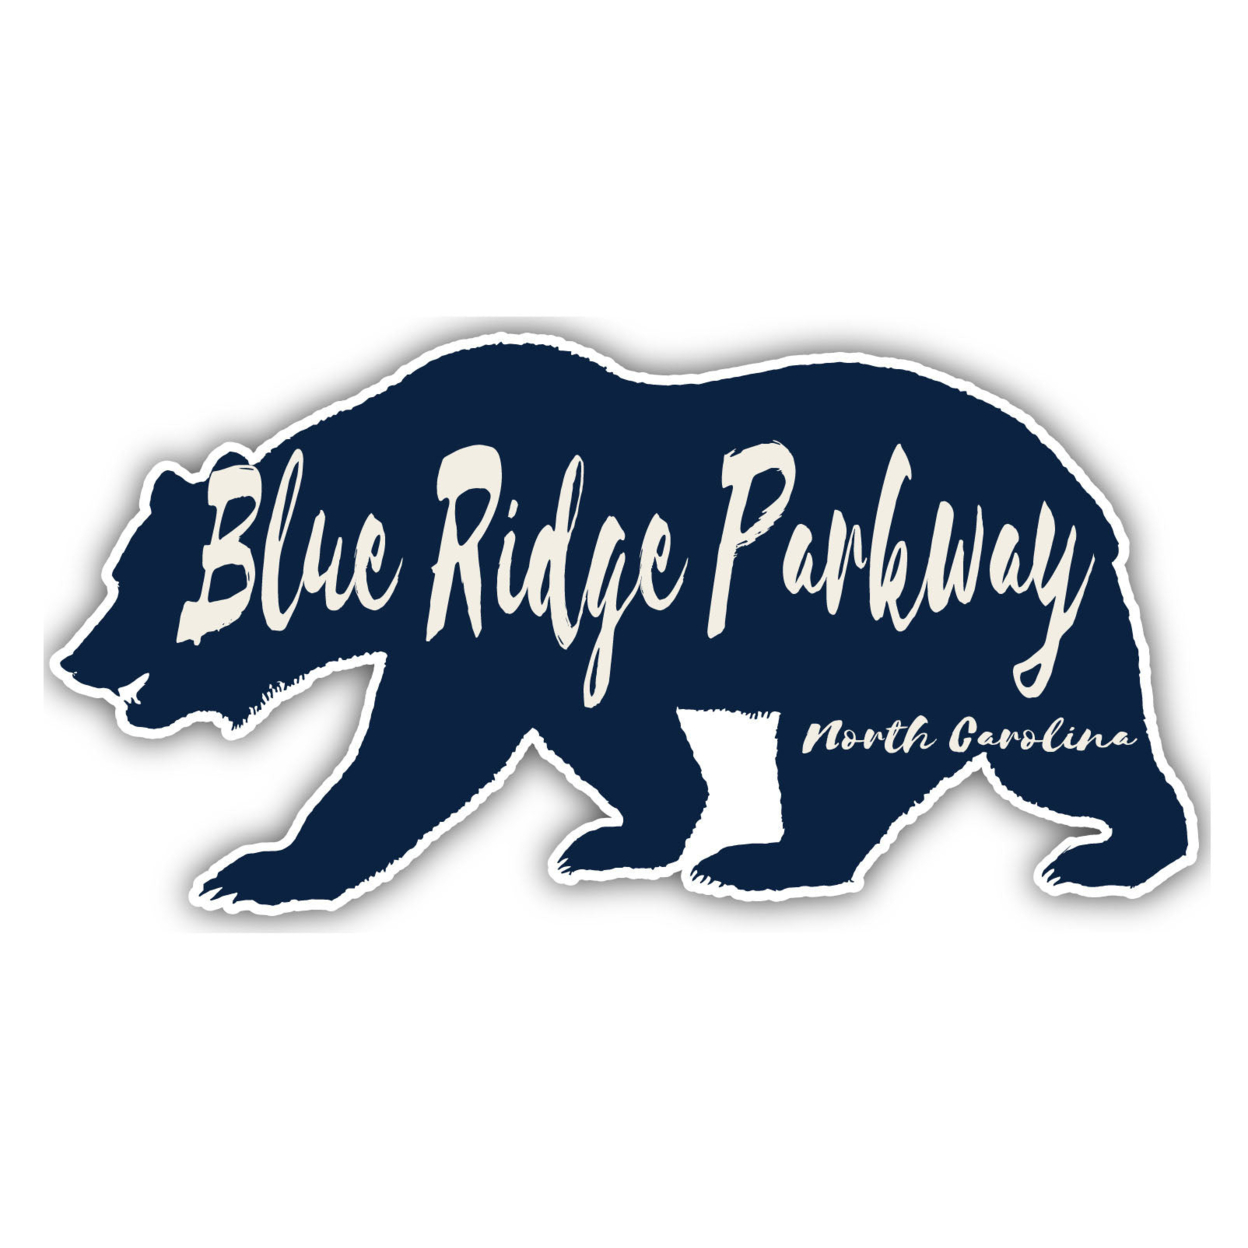 Blue Ridge Parkway North Carolina Souvenir Decorative Stickers (Choose Theme And Size) - 4-Pack, 2-Inch, Bear